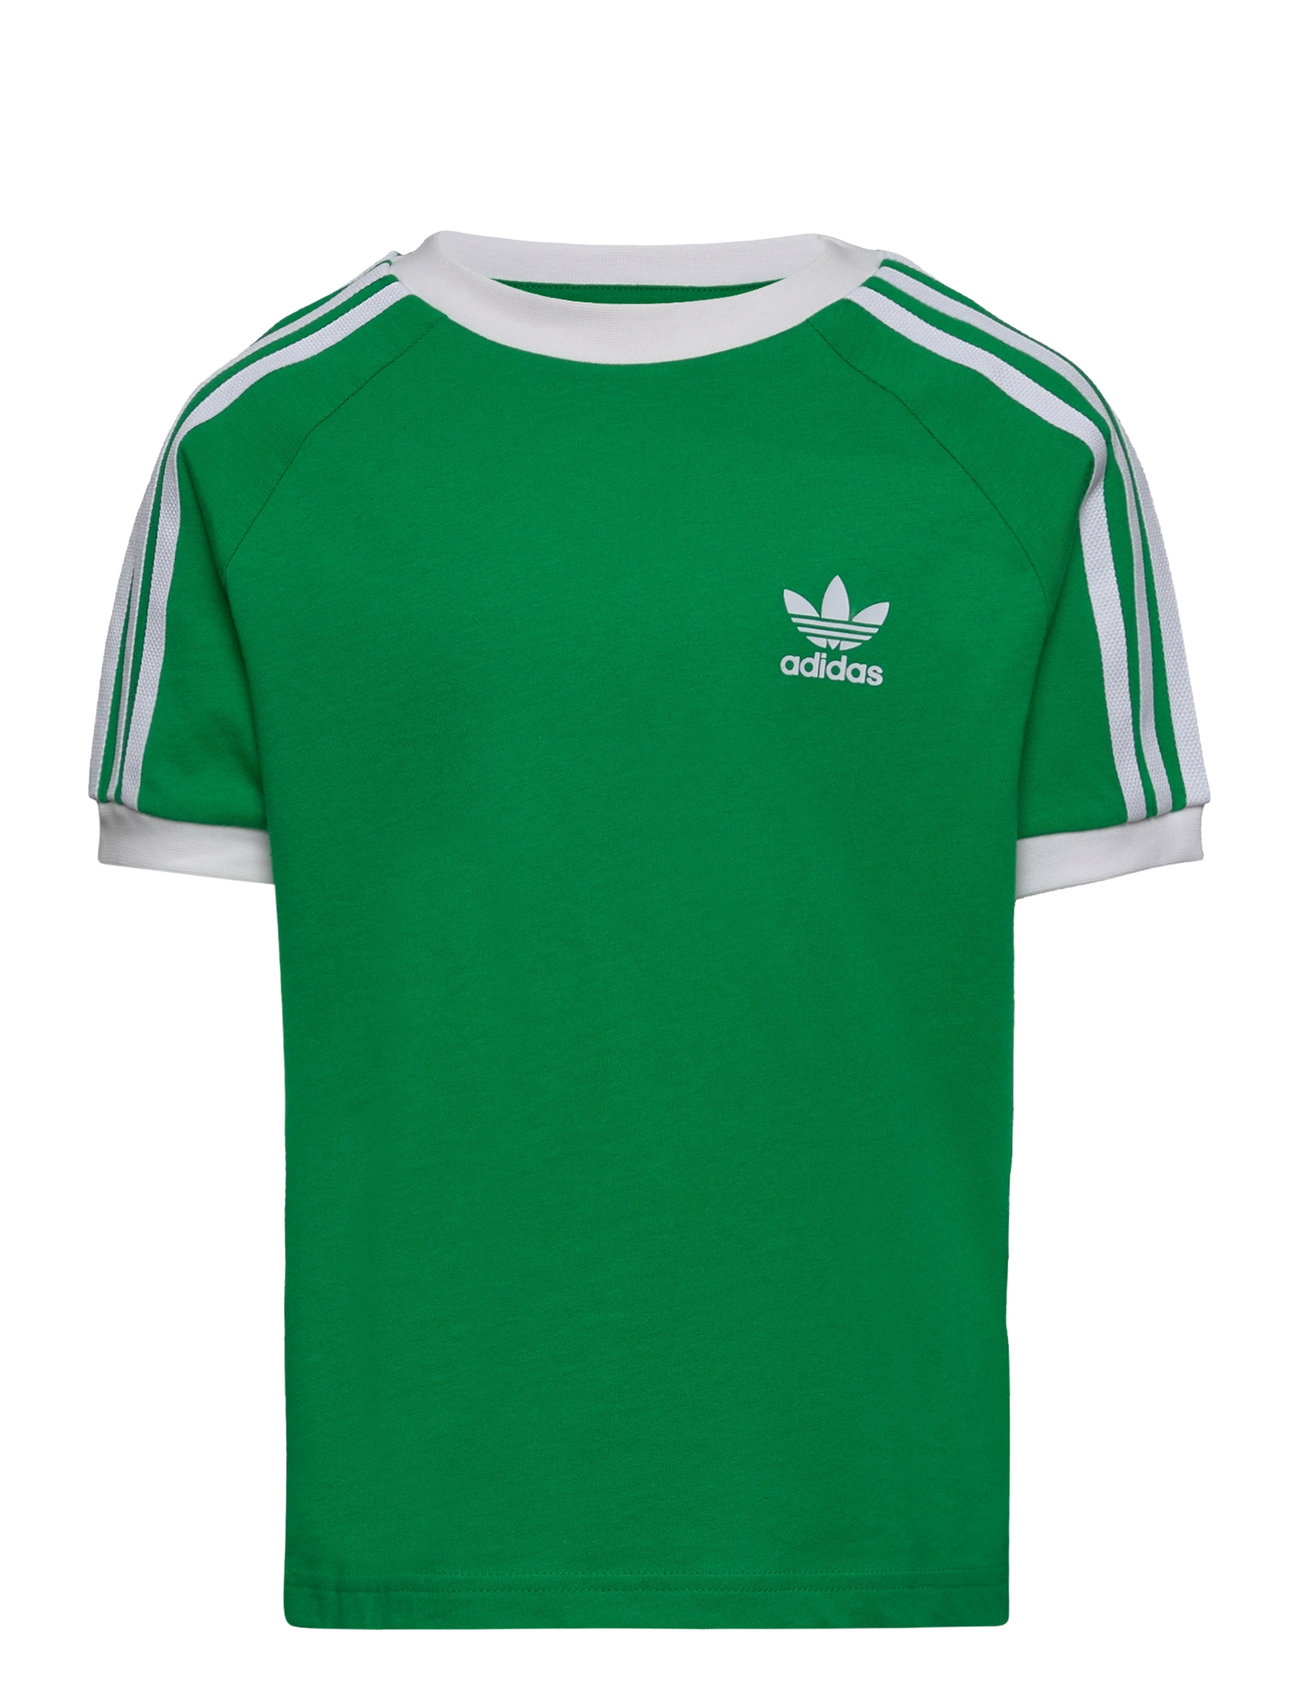 3Stripes Tee Sport T-shirts Short-sleeved Green Adidas Originals